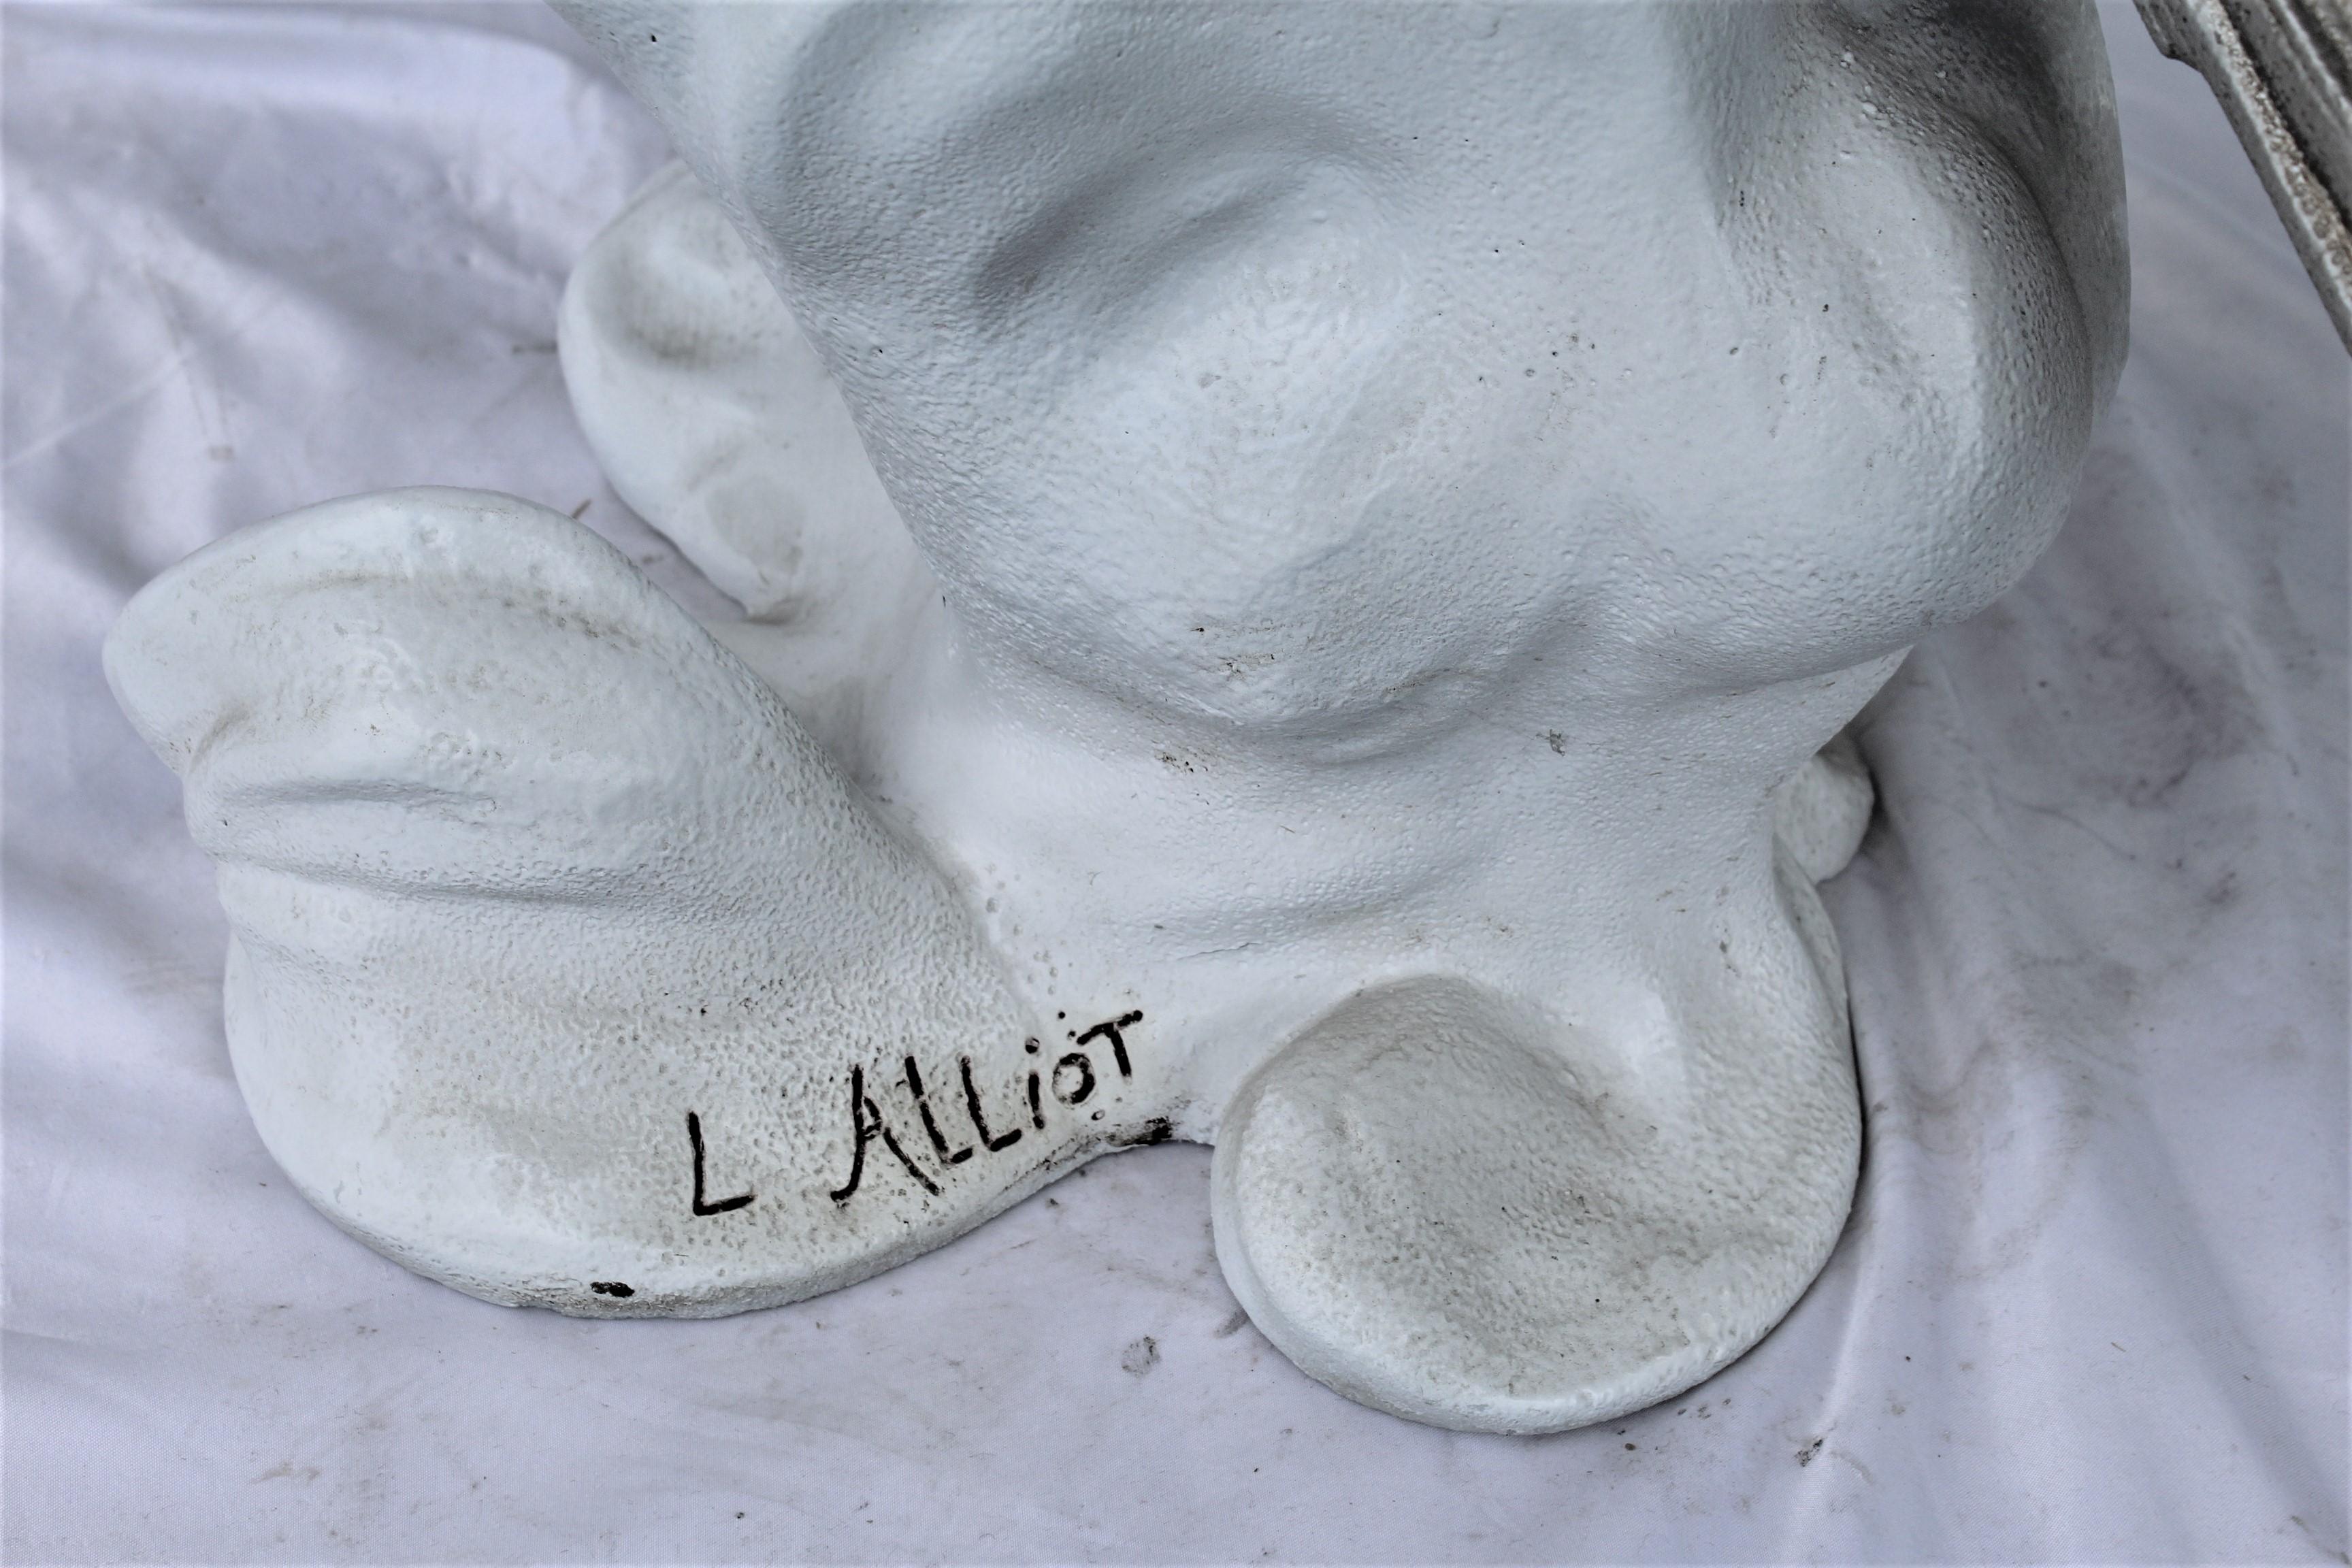 Cast Art Deco Figurine Orignal, Signed by Artist Title 'The Comet' Alliot